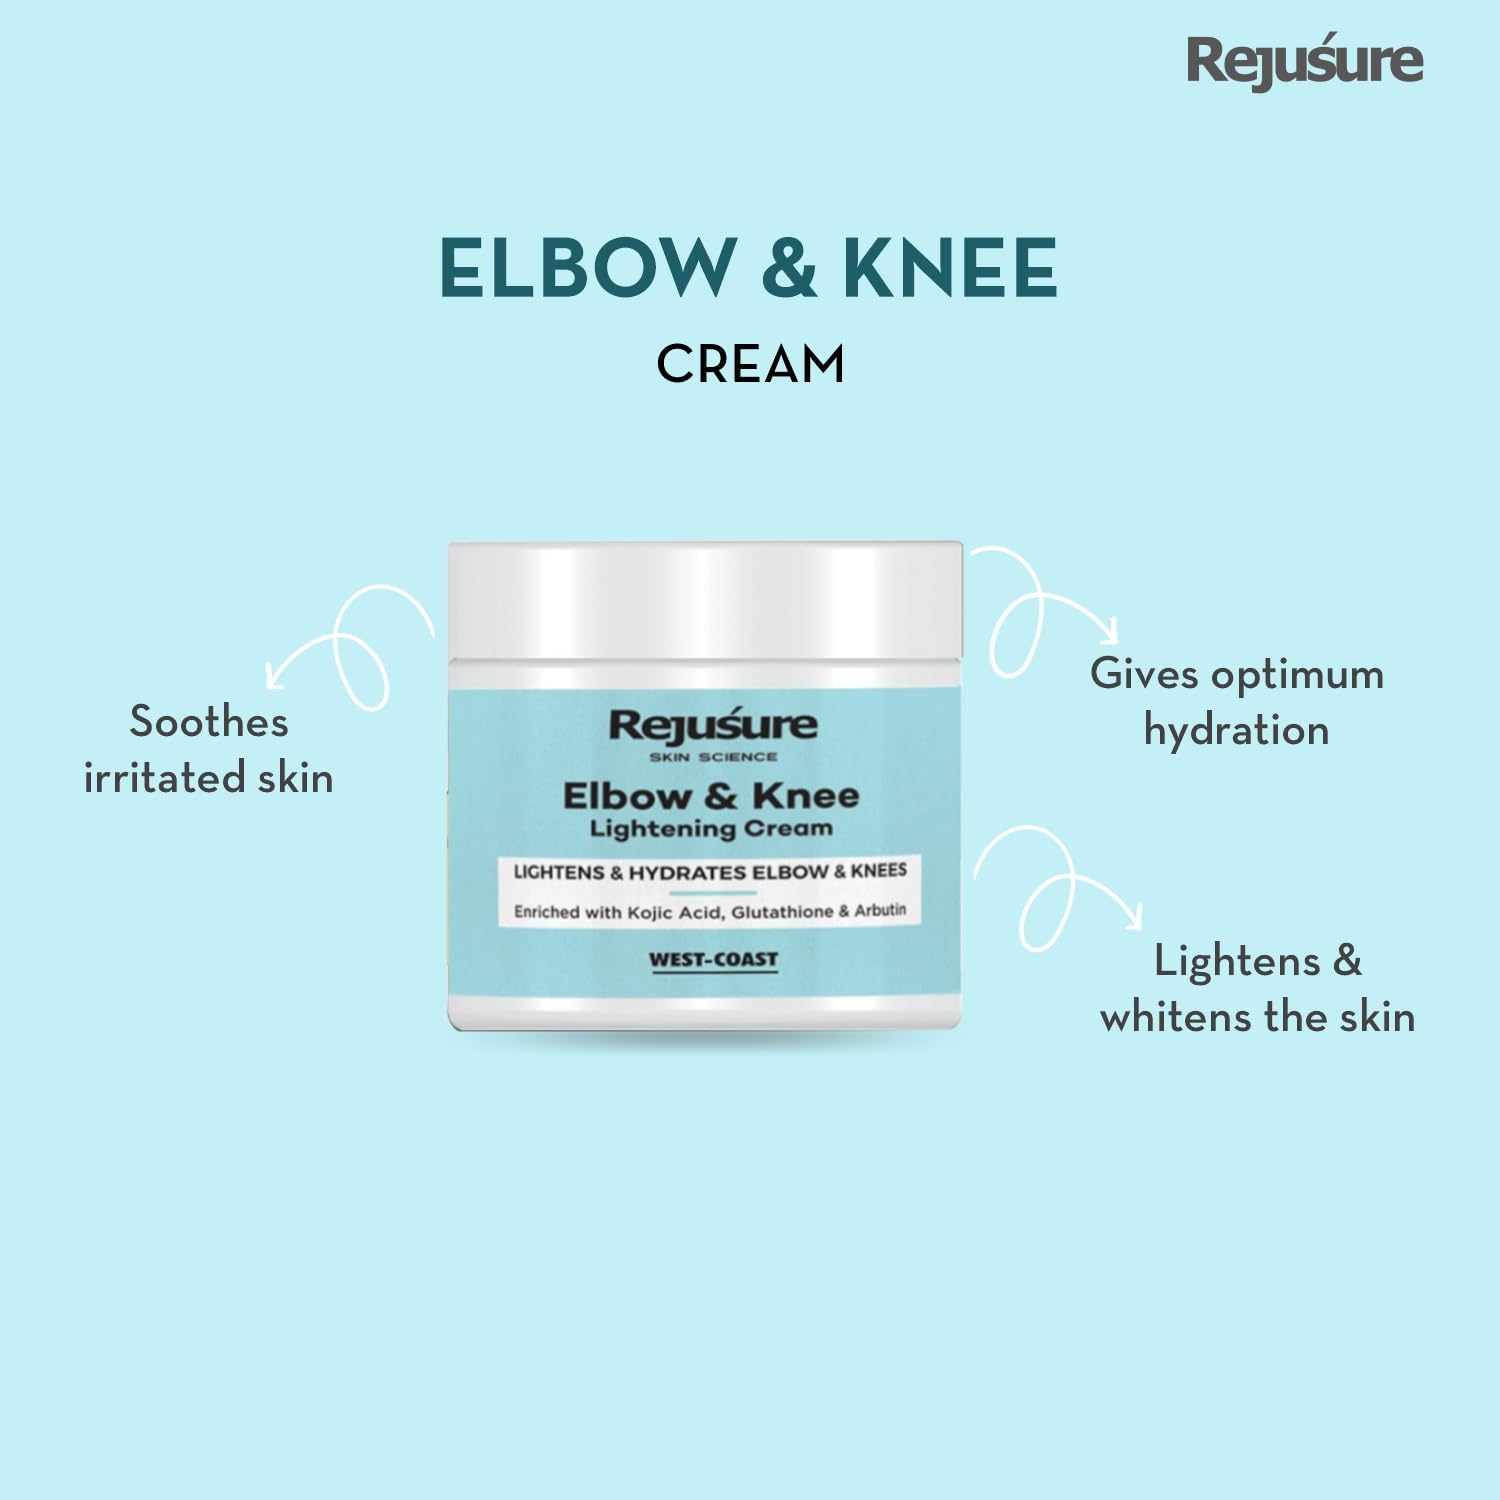 Rejusure Dark Spot Body Lightening Combo | Elbow & Knee Lightening Cream (50gm) & Under Arm Cream (50gm) - For Dark Neck & Underarms